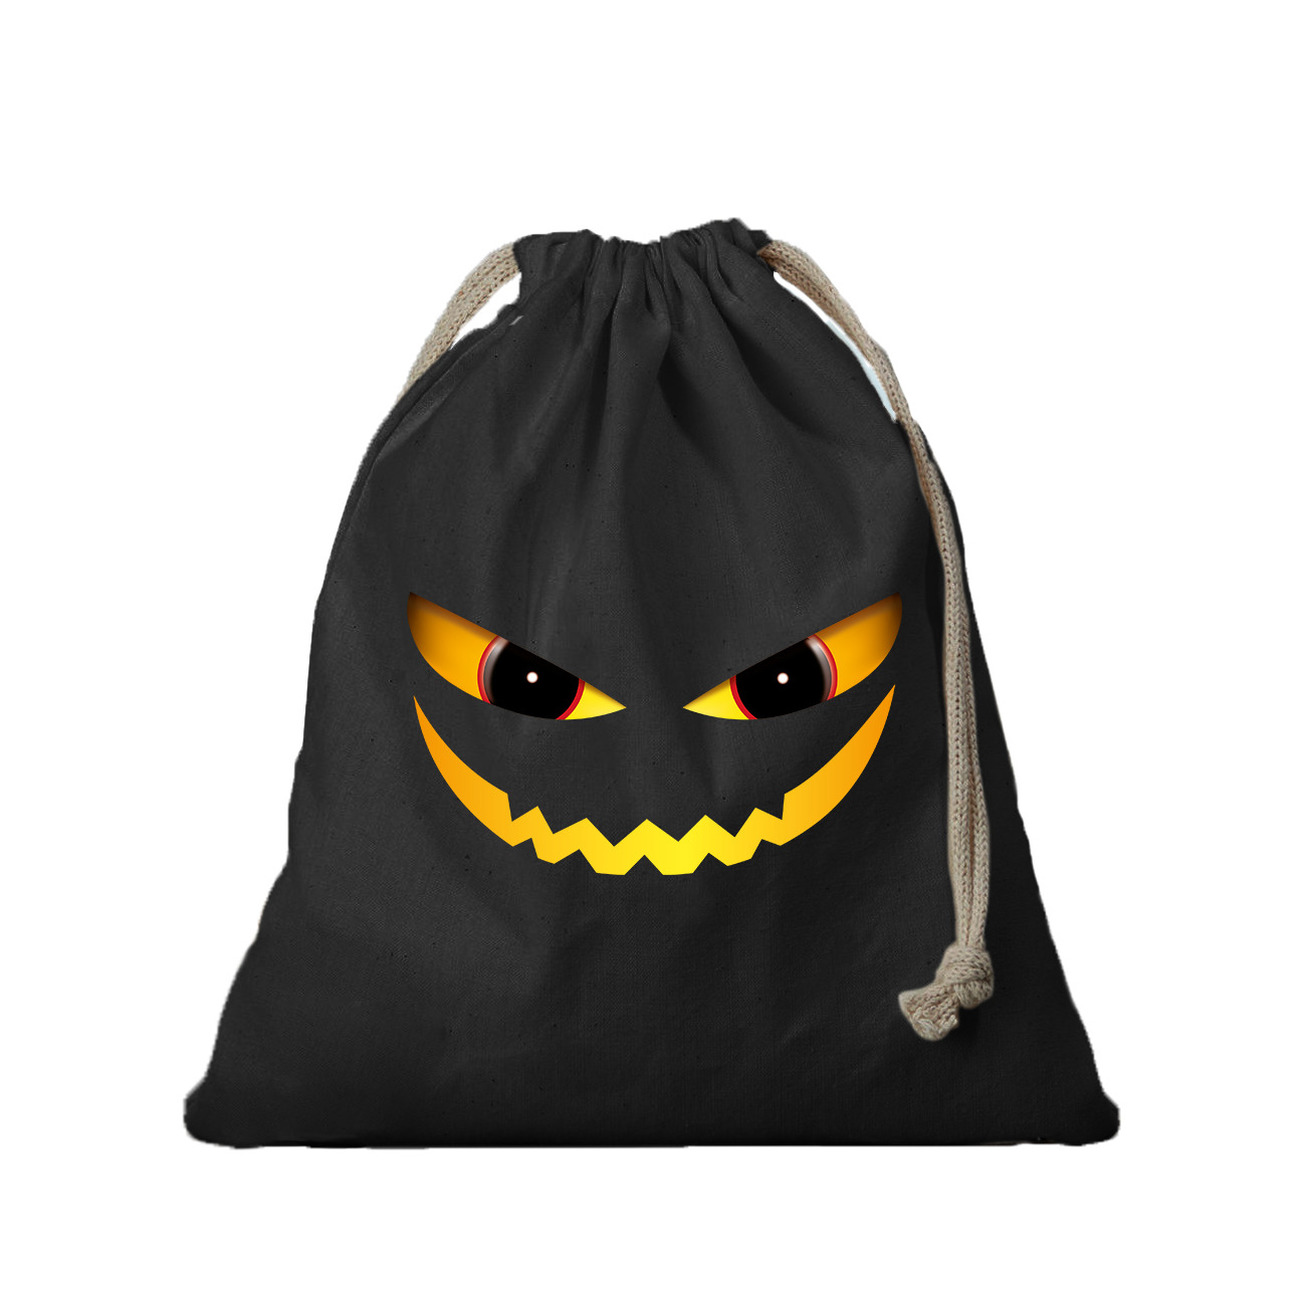 Halloween - 2x Duivel gezicht halloween canvas snoep tasje/ snoepzakje zwart met koord 25 x 30 cm